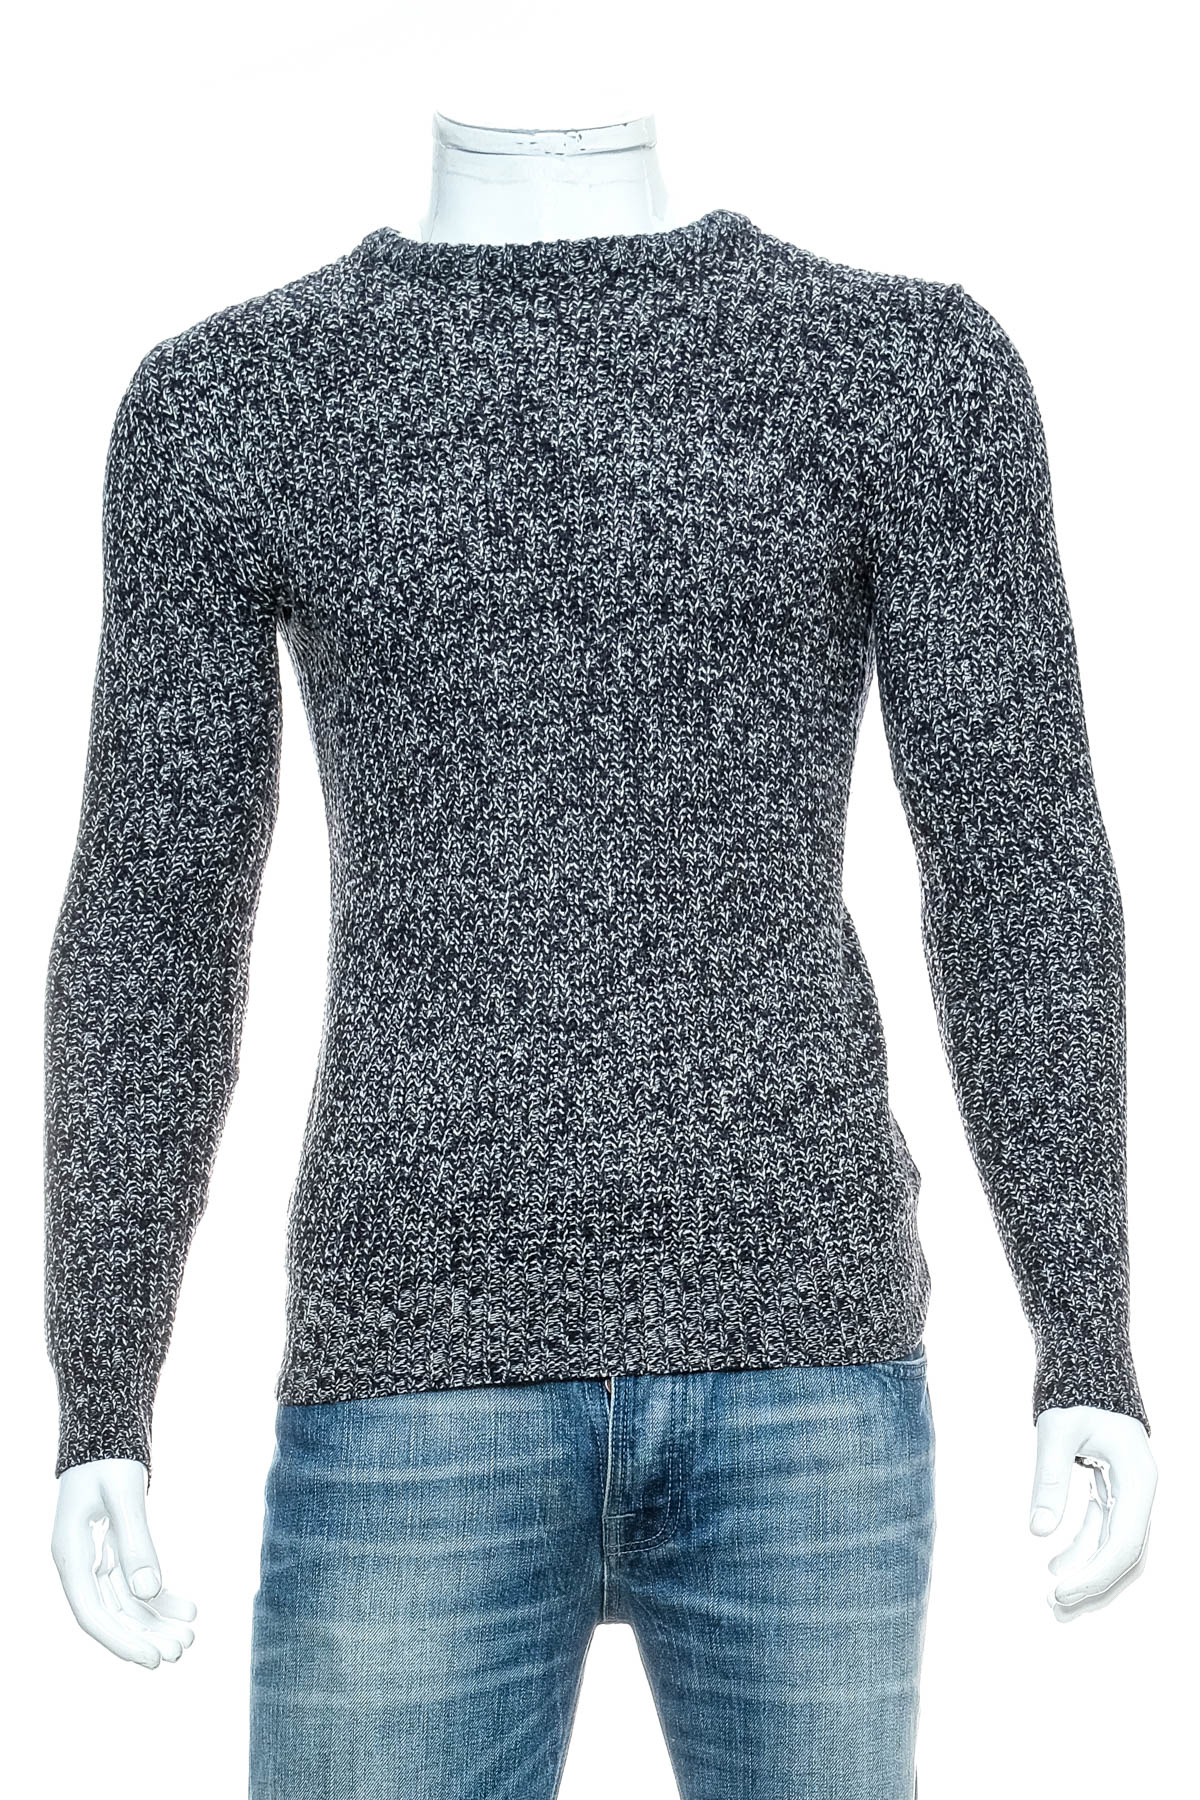 Men's sweater - Cedar Wood State - 0